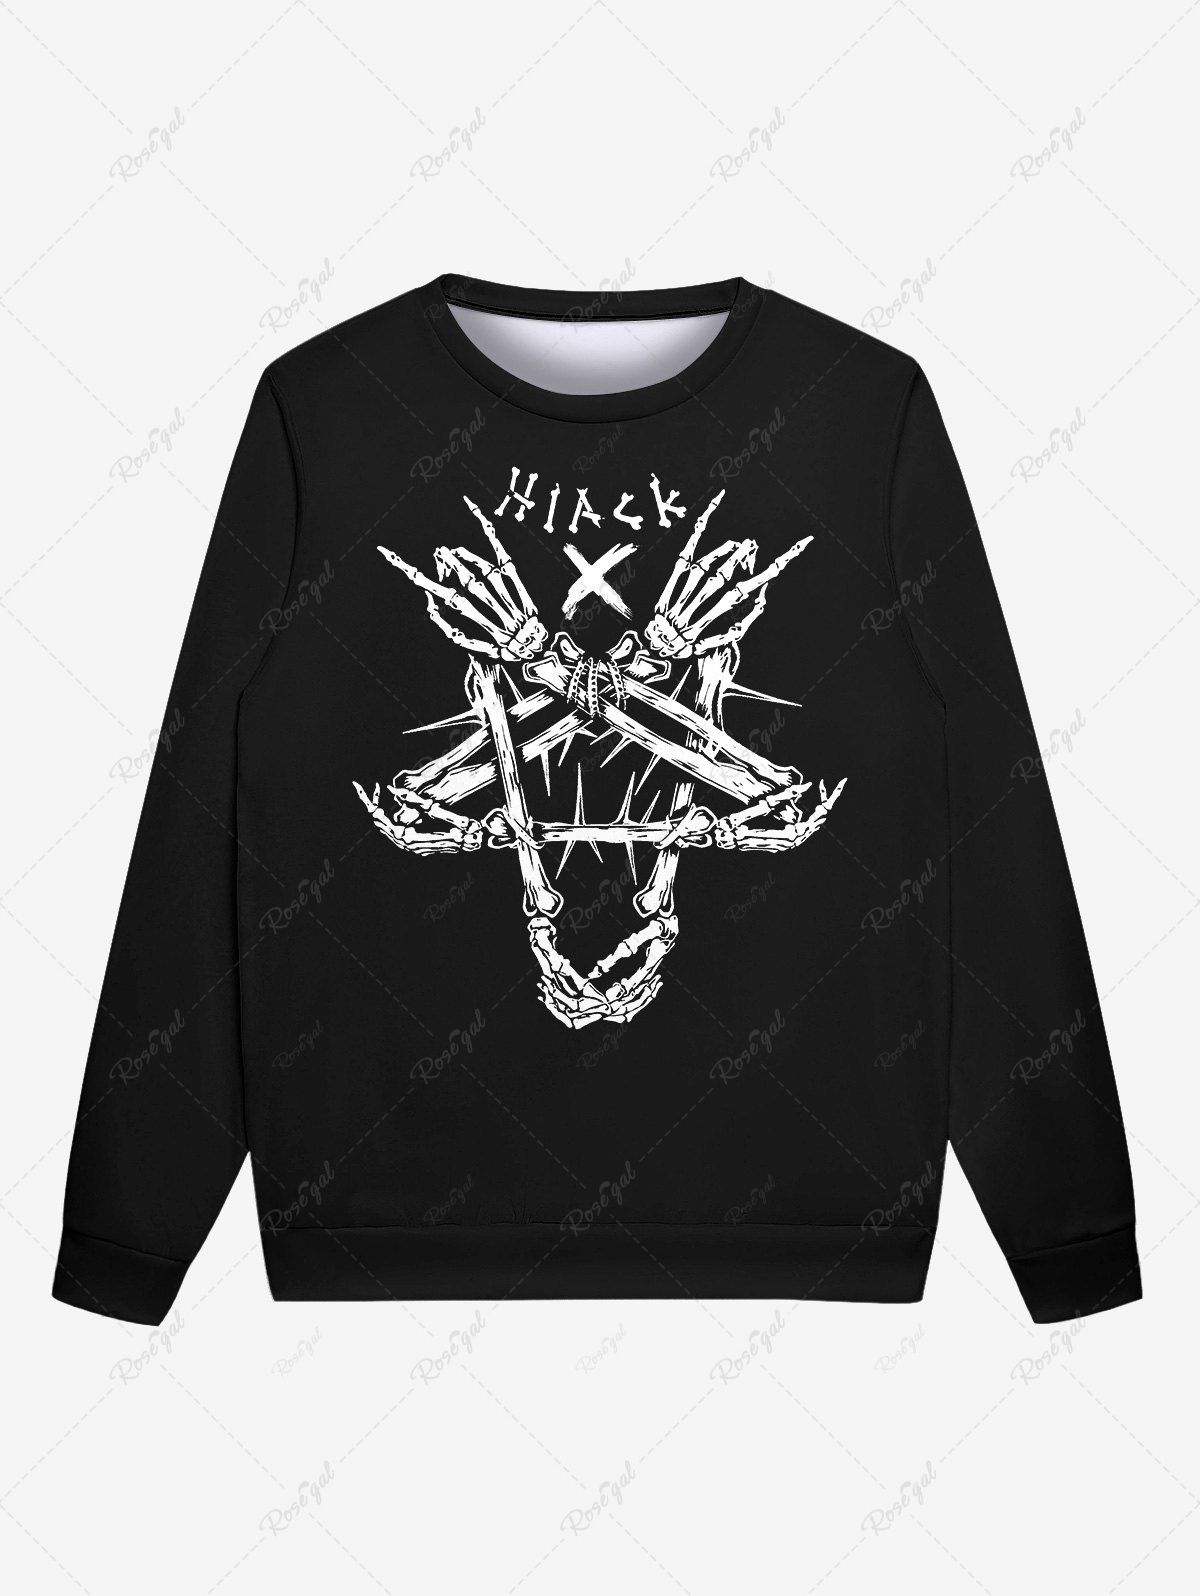 New Gothic Skeleton Claws Cross Letters Print Crew Neck Sweatshirt For Men  